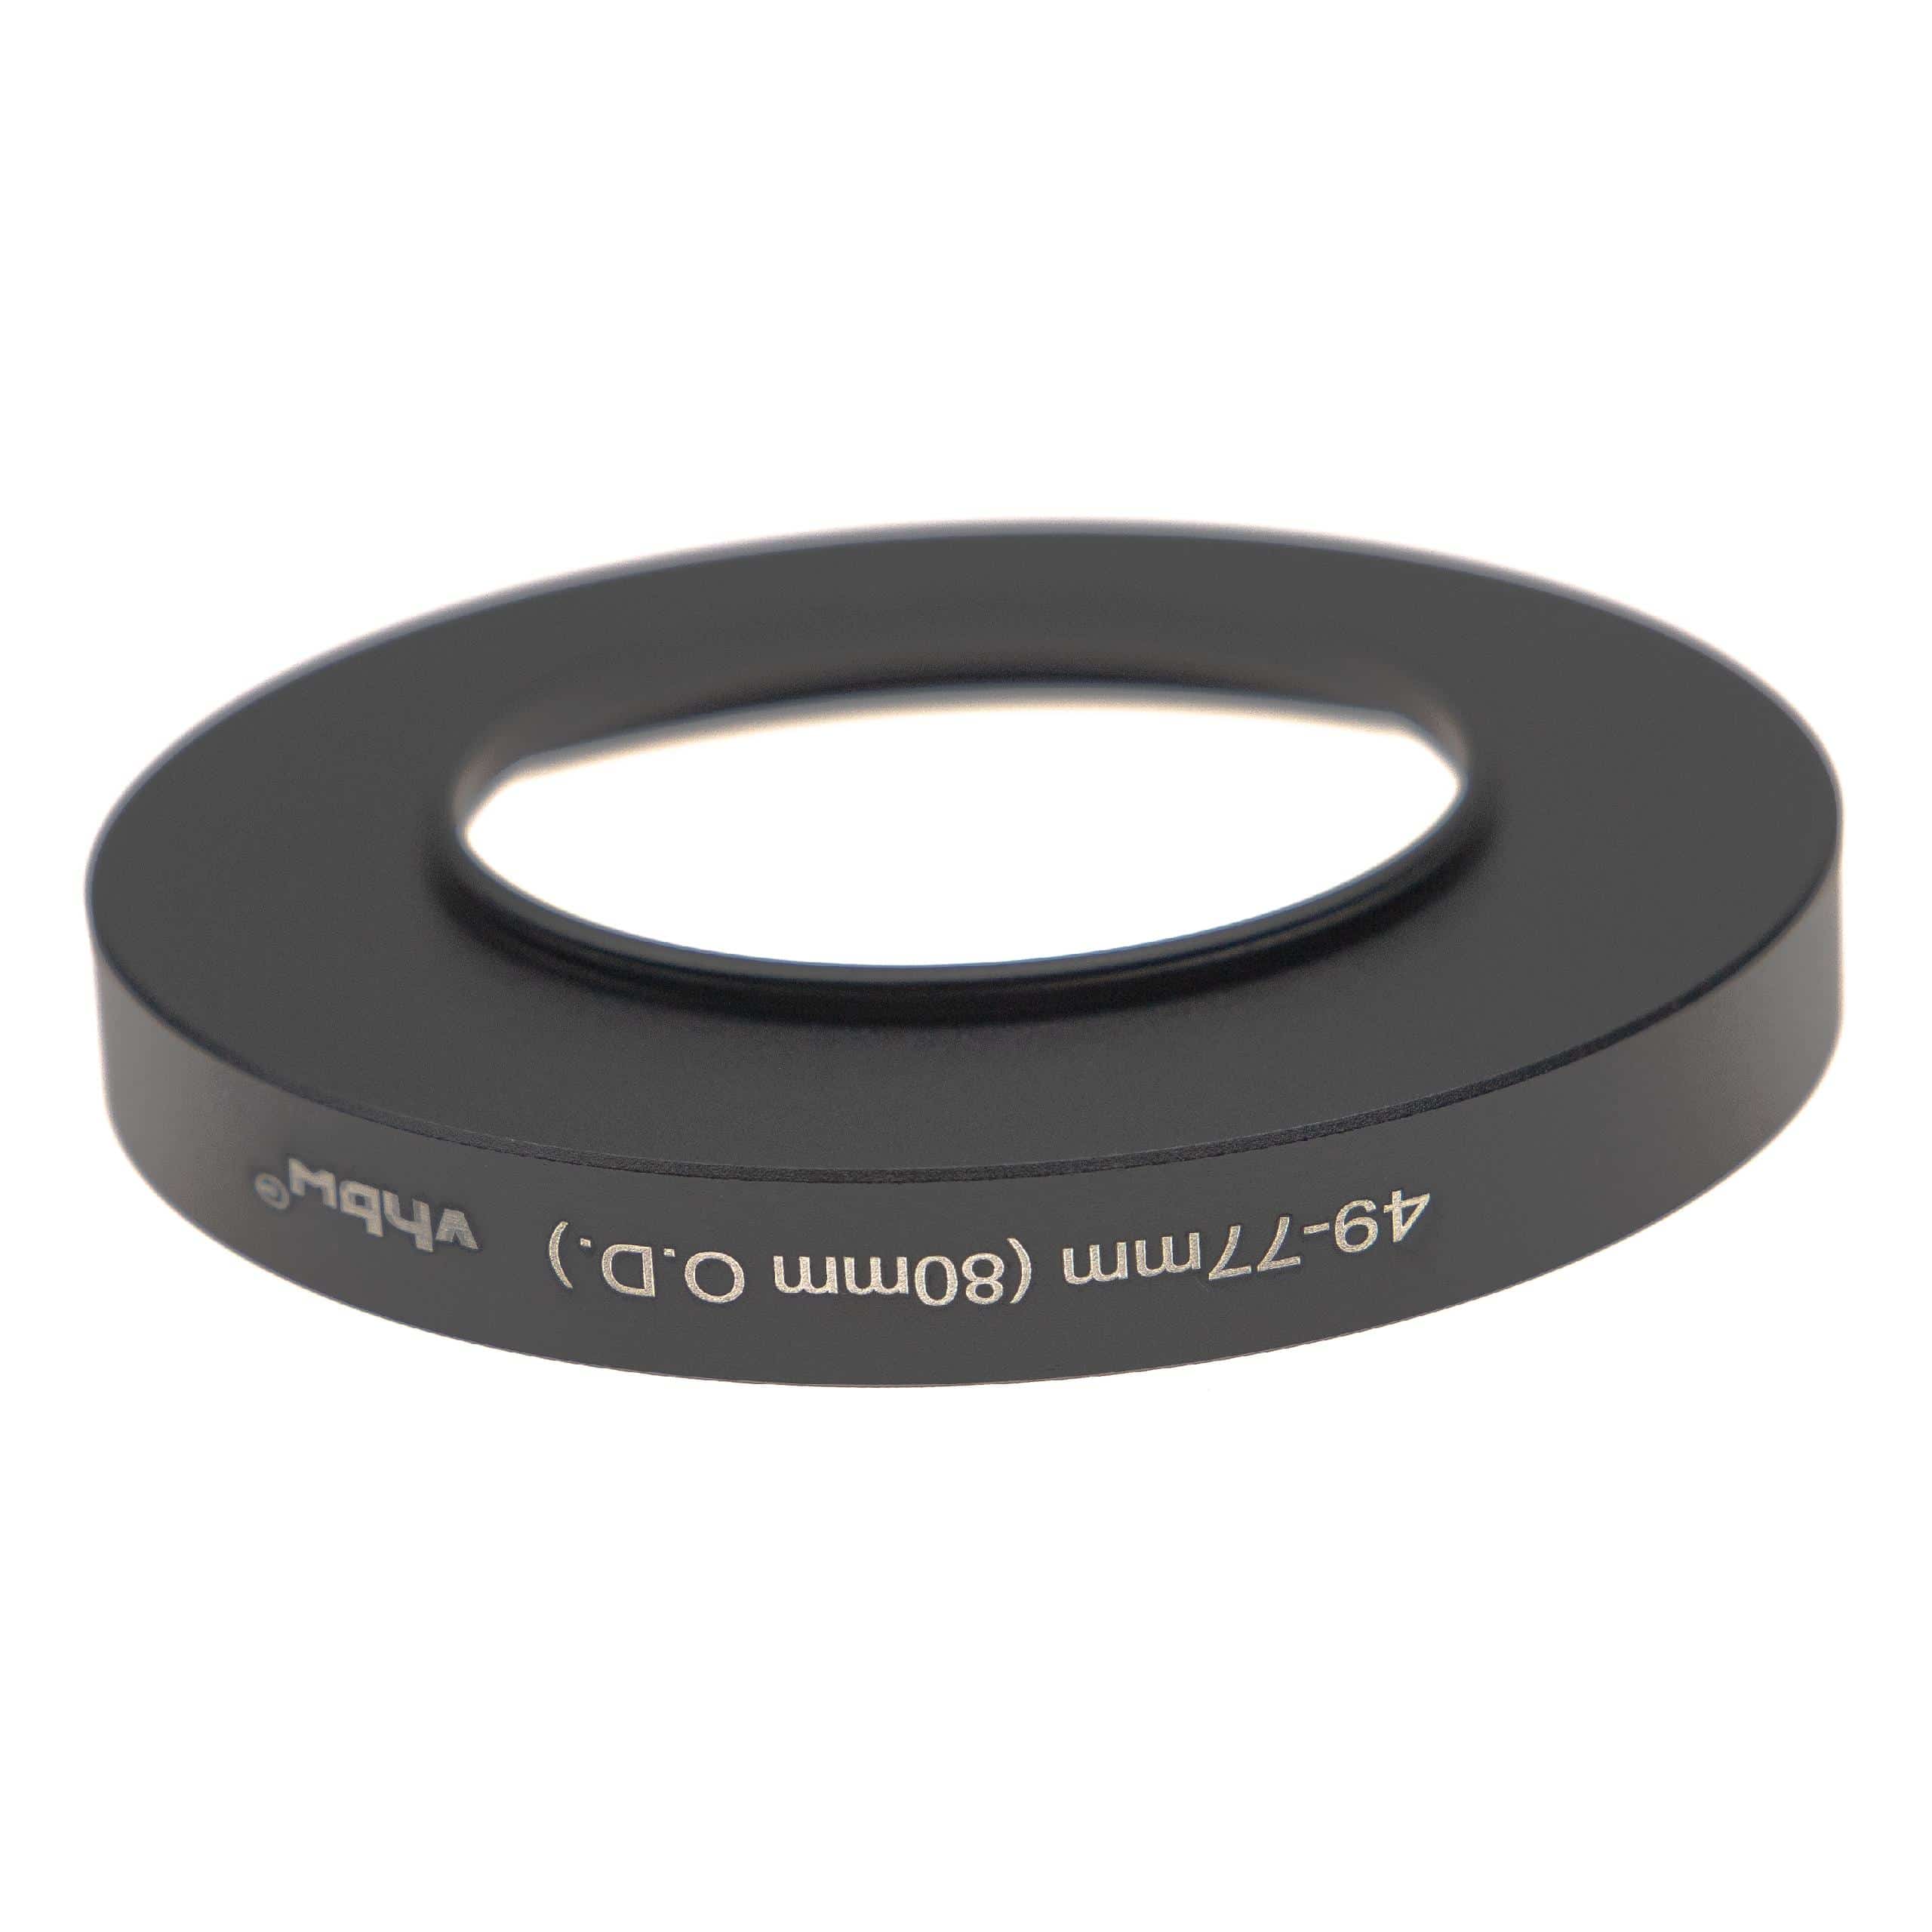 Step-Up-Ring Adapter 49 mm auf 77 mm passend für Matte Boxen 80 mm O.D. - Filteradapter